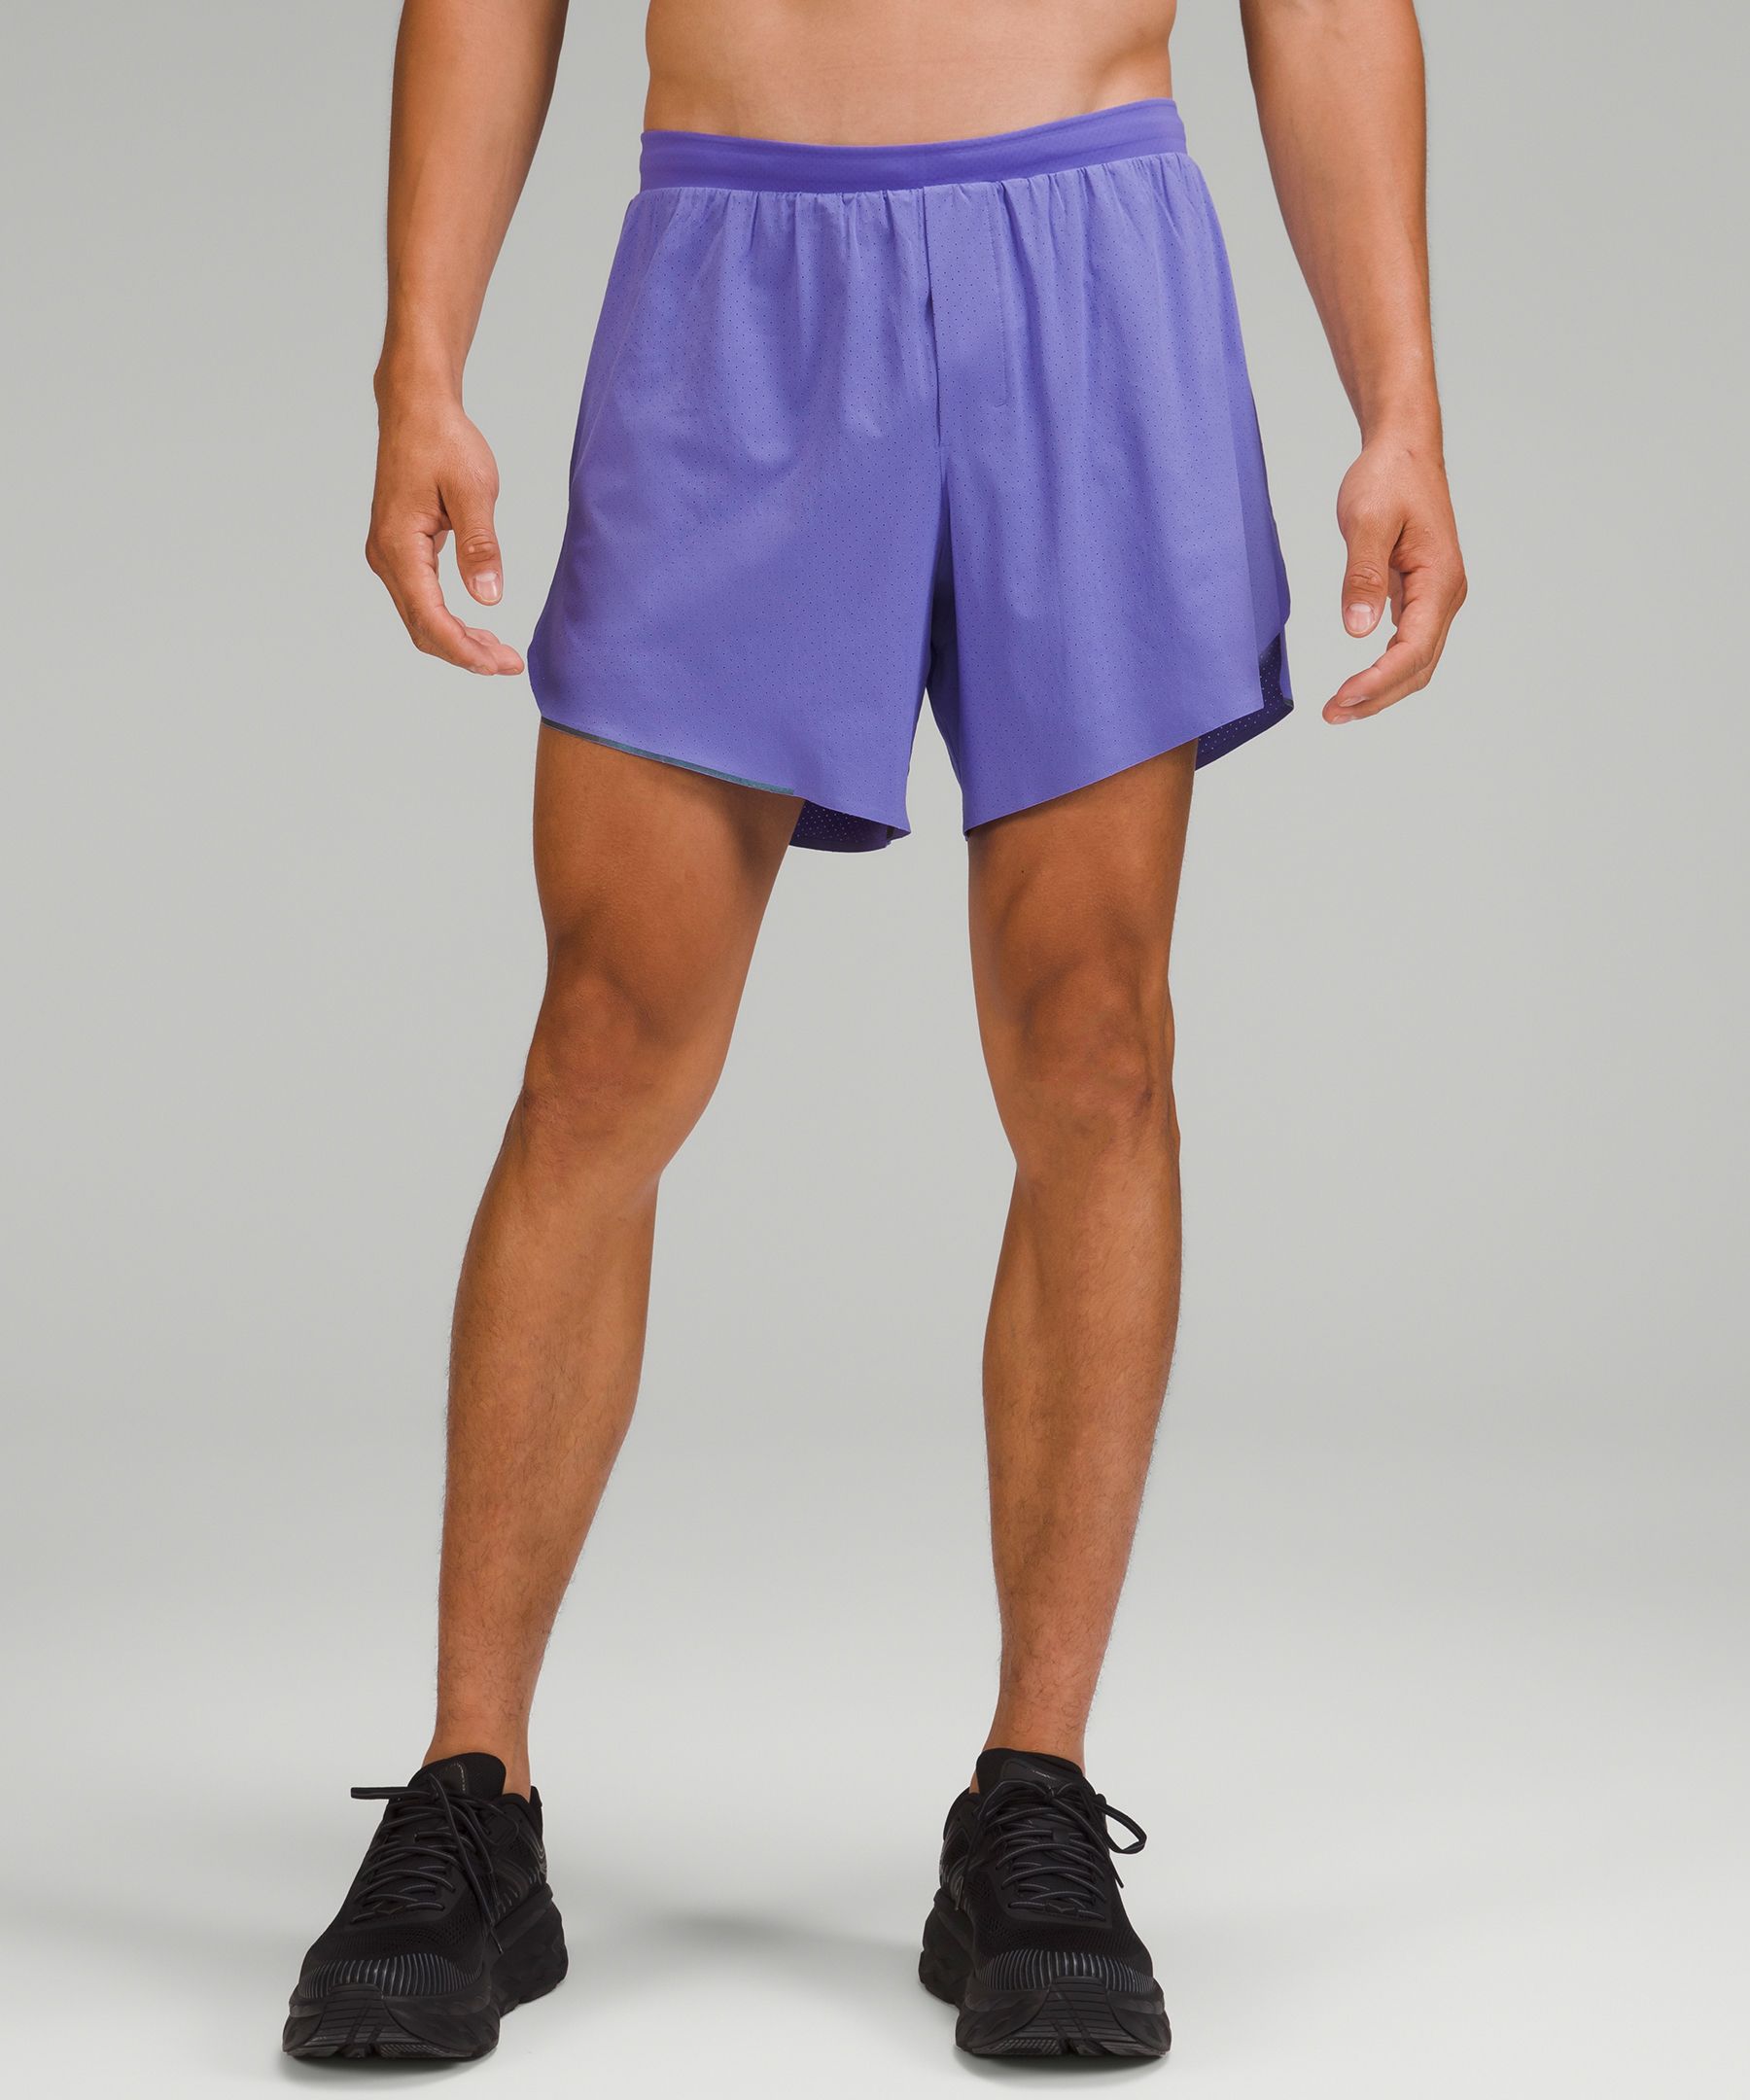 Men's Neon Shorts | lululemon